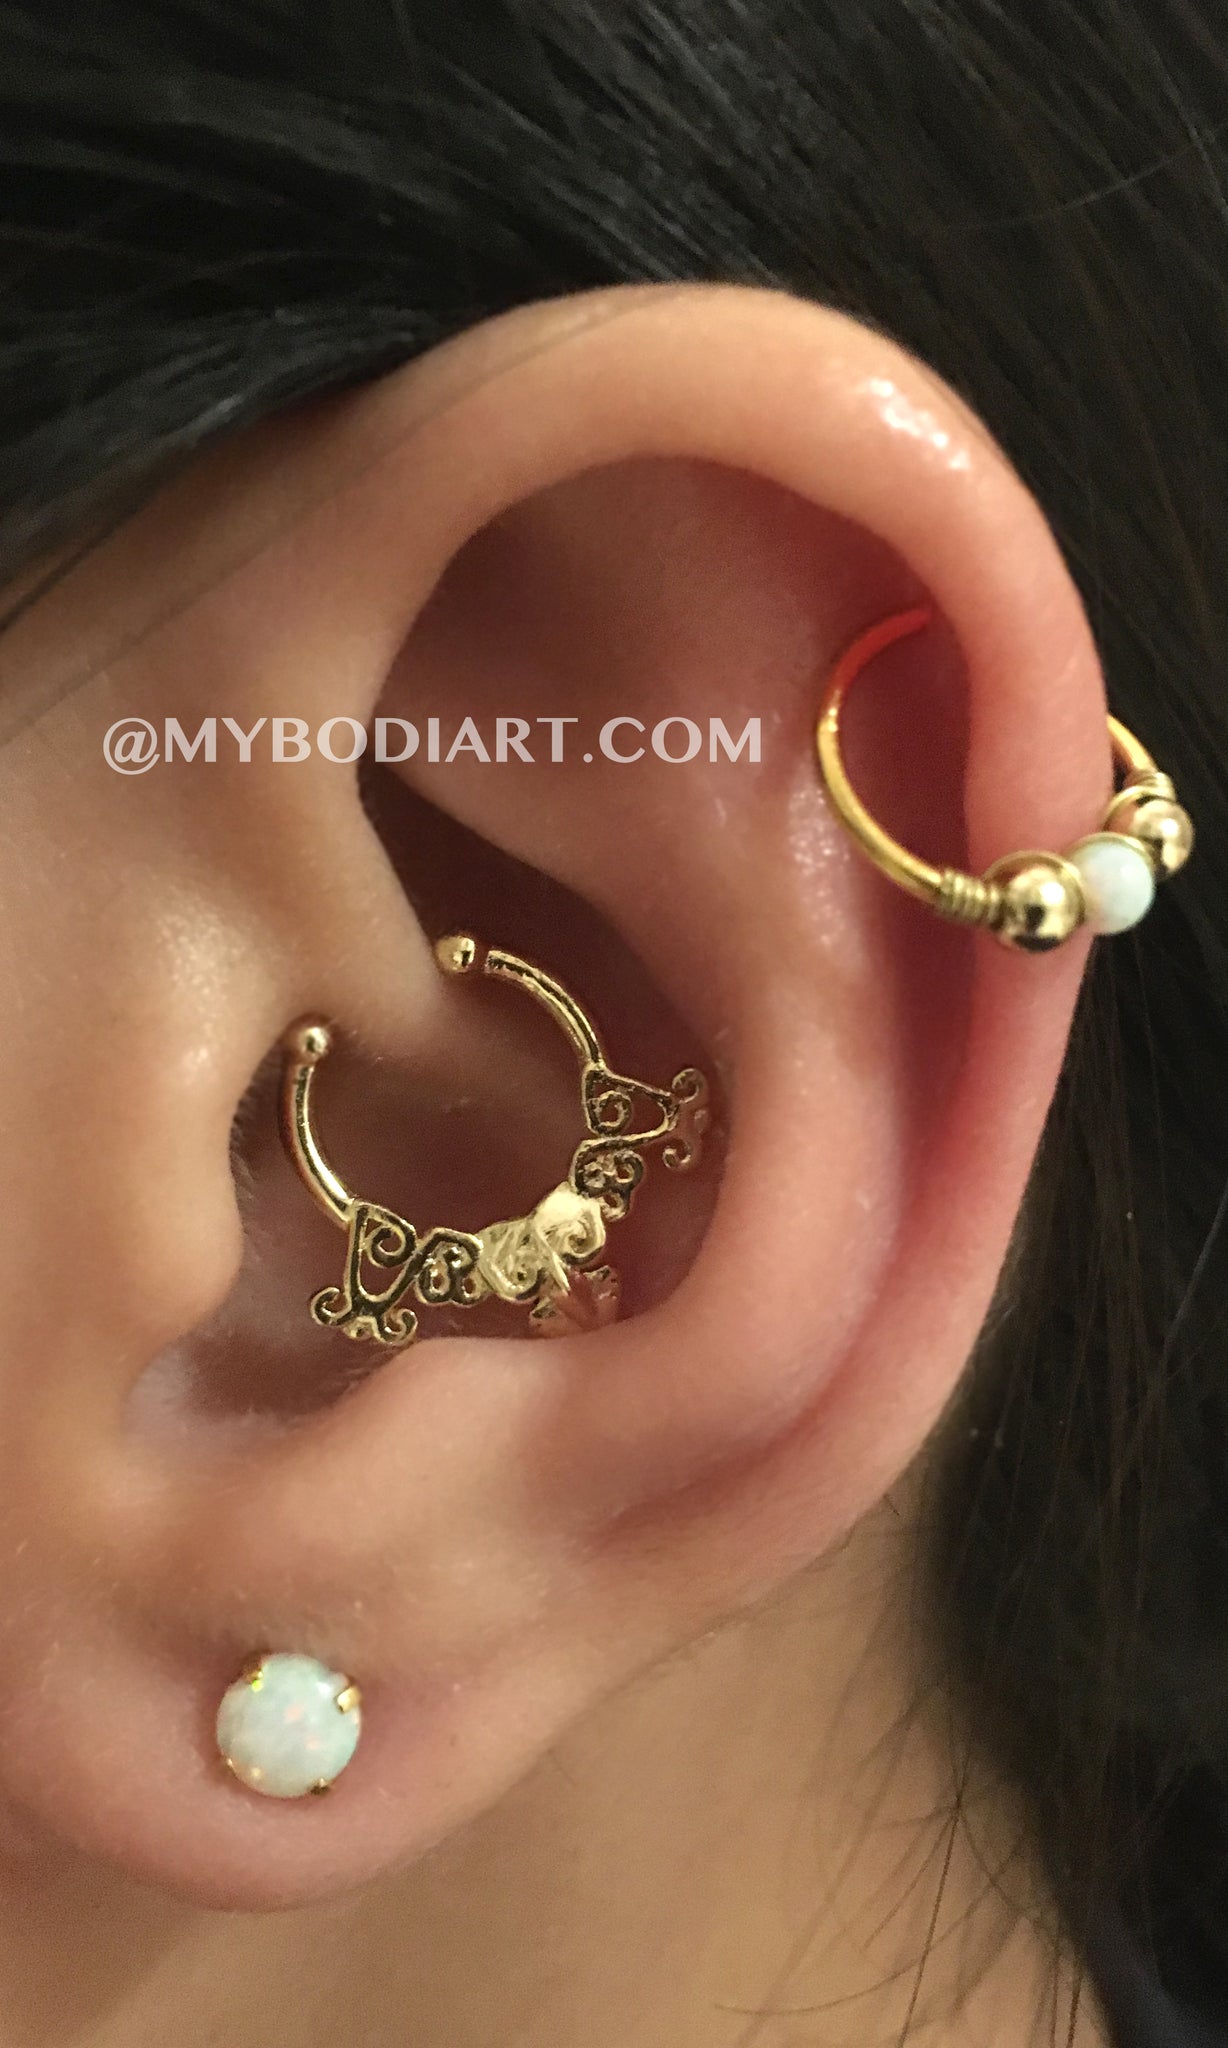 Cute Gold Ear Piercing Ideas - Gold Opal Cartilage Ring - Daith Hoop Earring - Lobe Studs - www.MyBodiArt.com